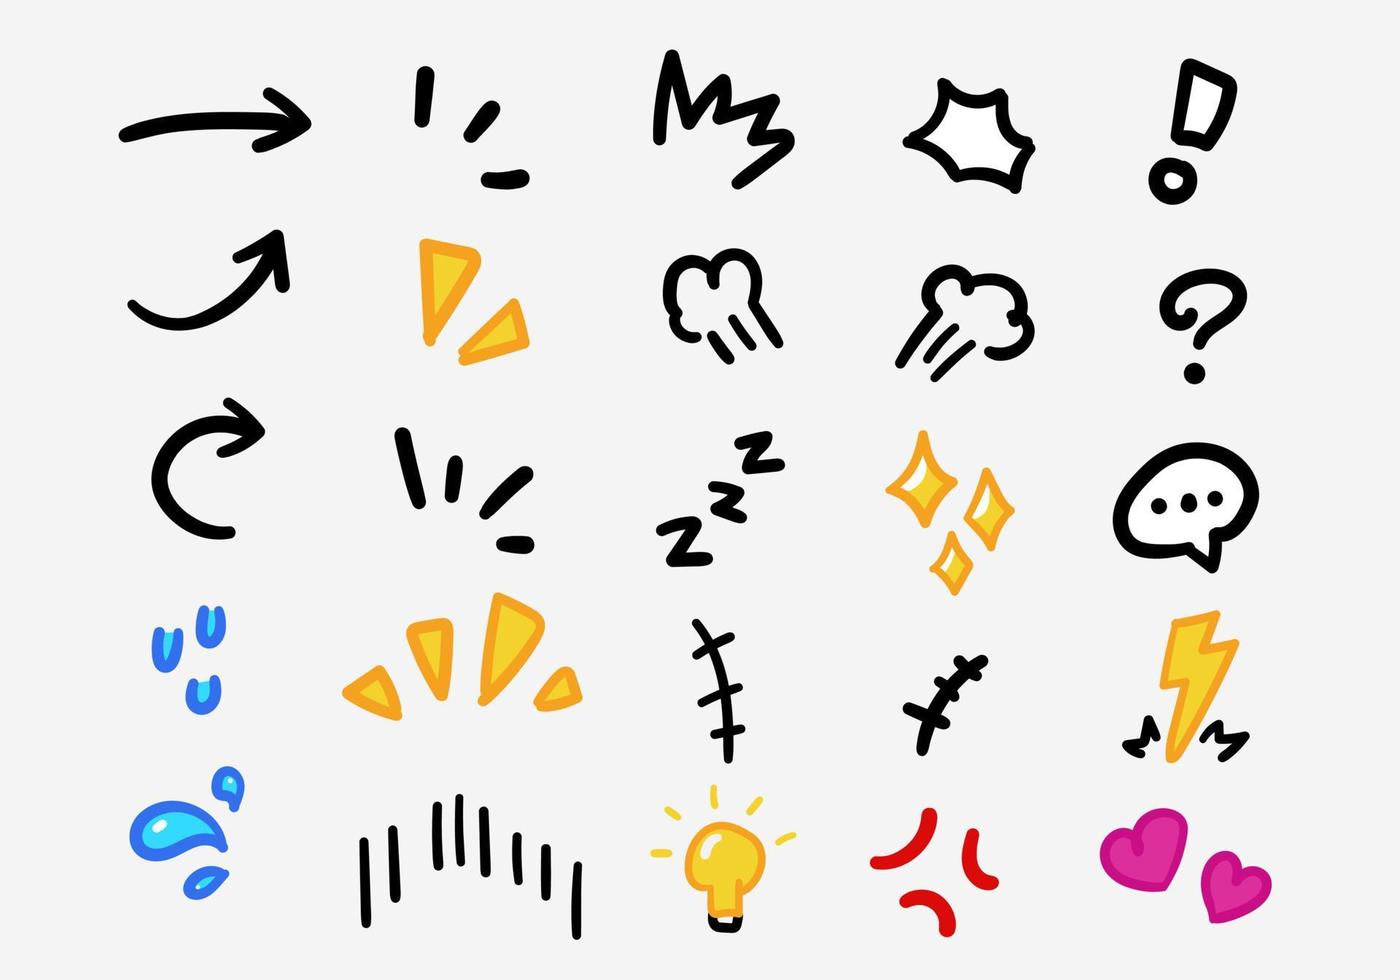 Conjunto de vectores de doodle de signo de expresión de dibujos animados  dibujados a mano, flechas